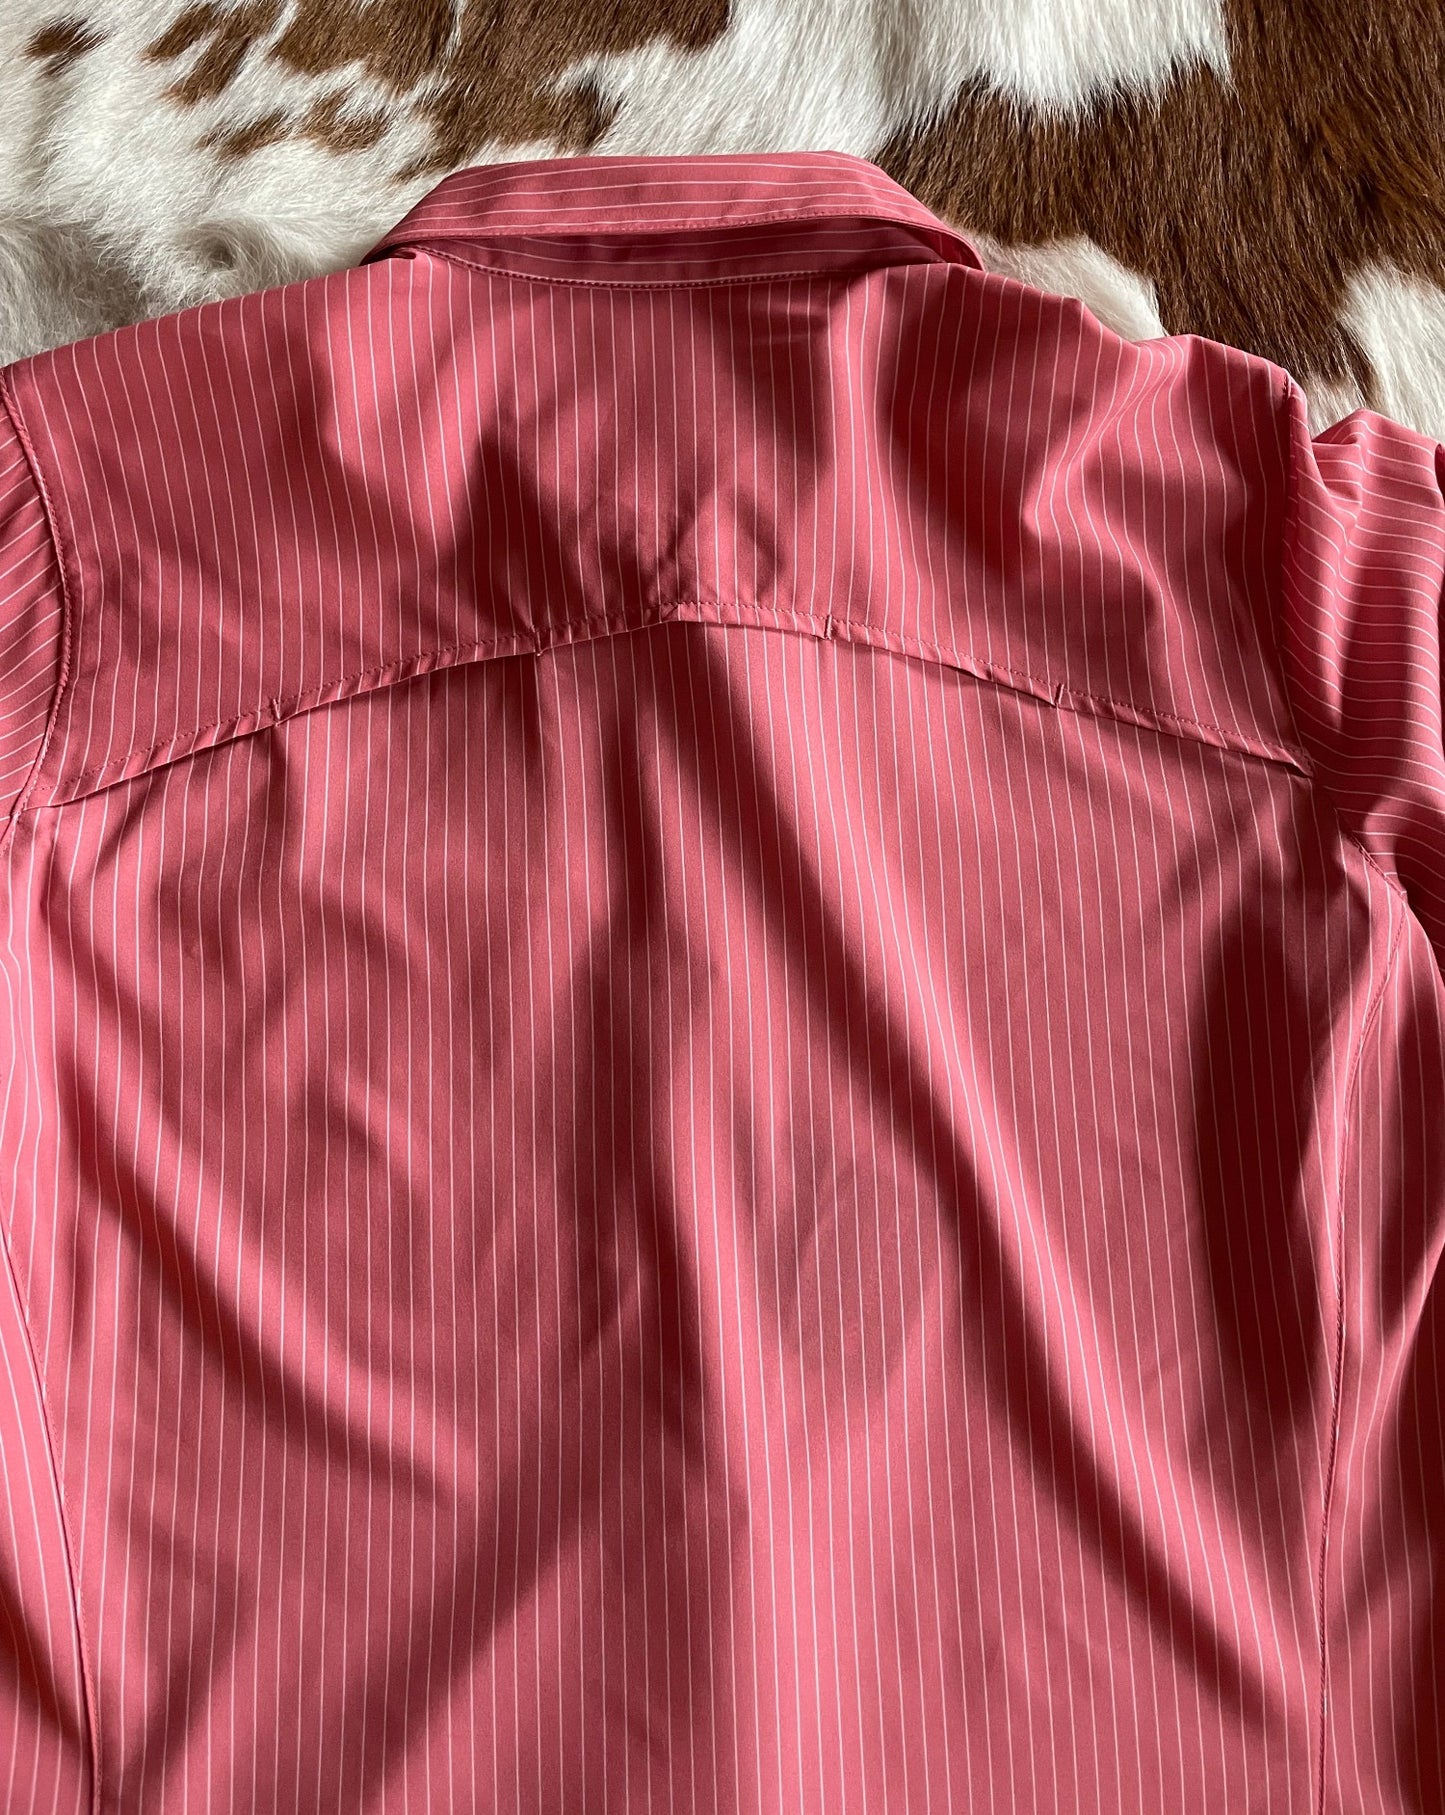 close up of back vent on Ariat VenTEK women's long sleeved shirt